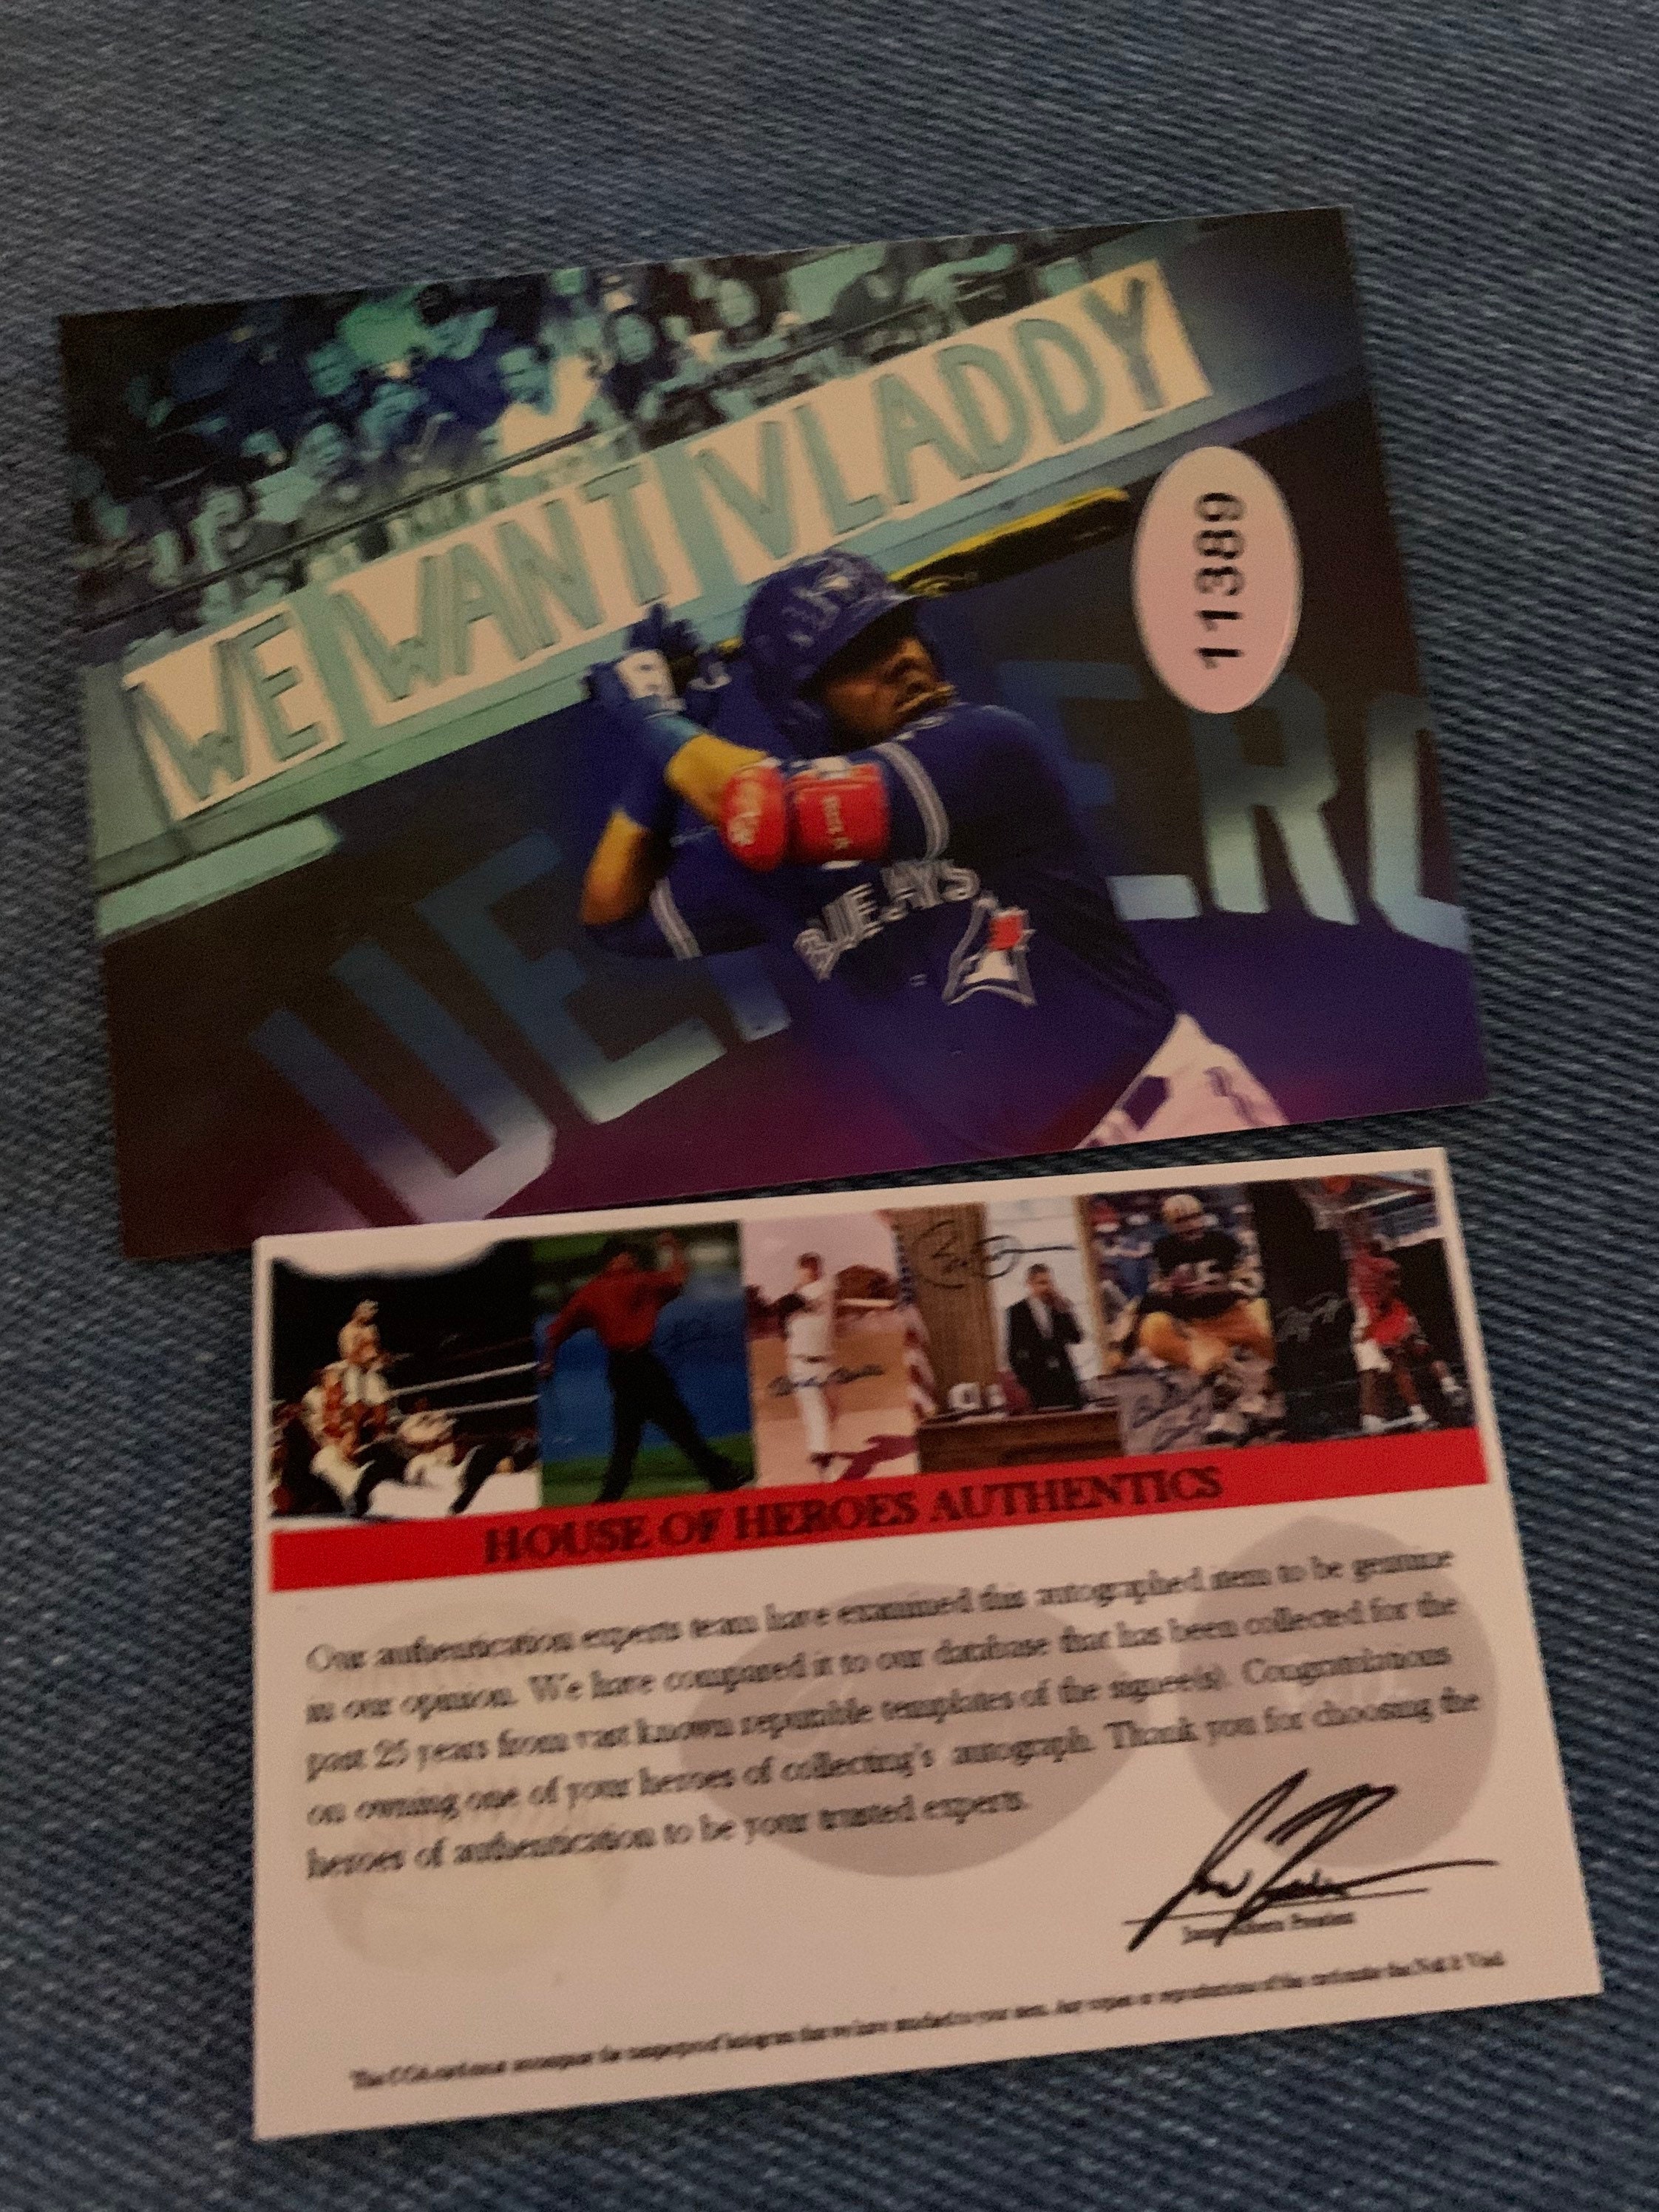 Vladimir Guerrero Jr Autographed Toronto Blue Jays 16x20 Photo - JSA COA  (White Jersey)